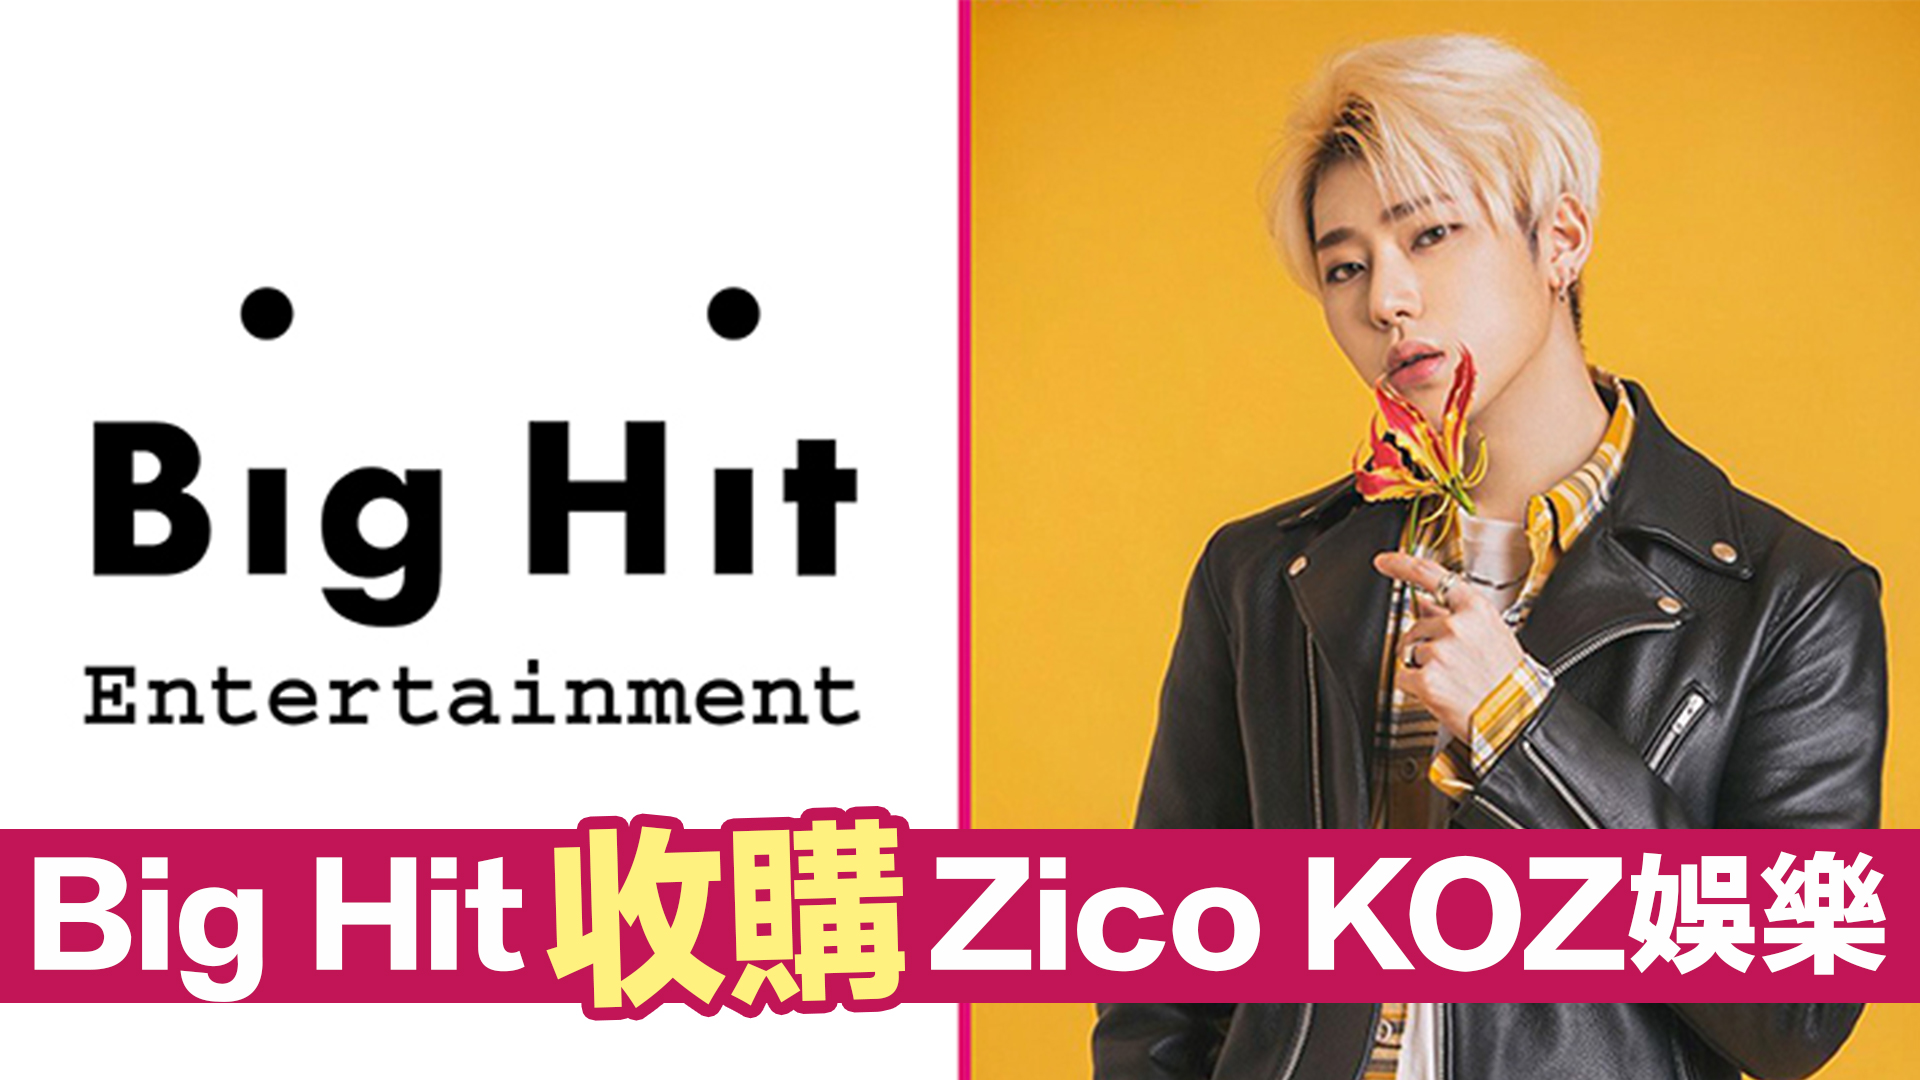 Big Hit宣佈收購Zico KOZ娛樂 公司上市BTS獲贈股票